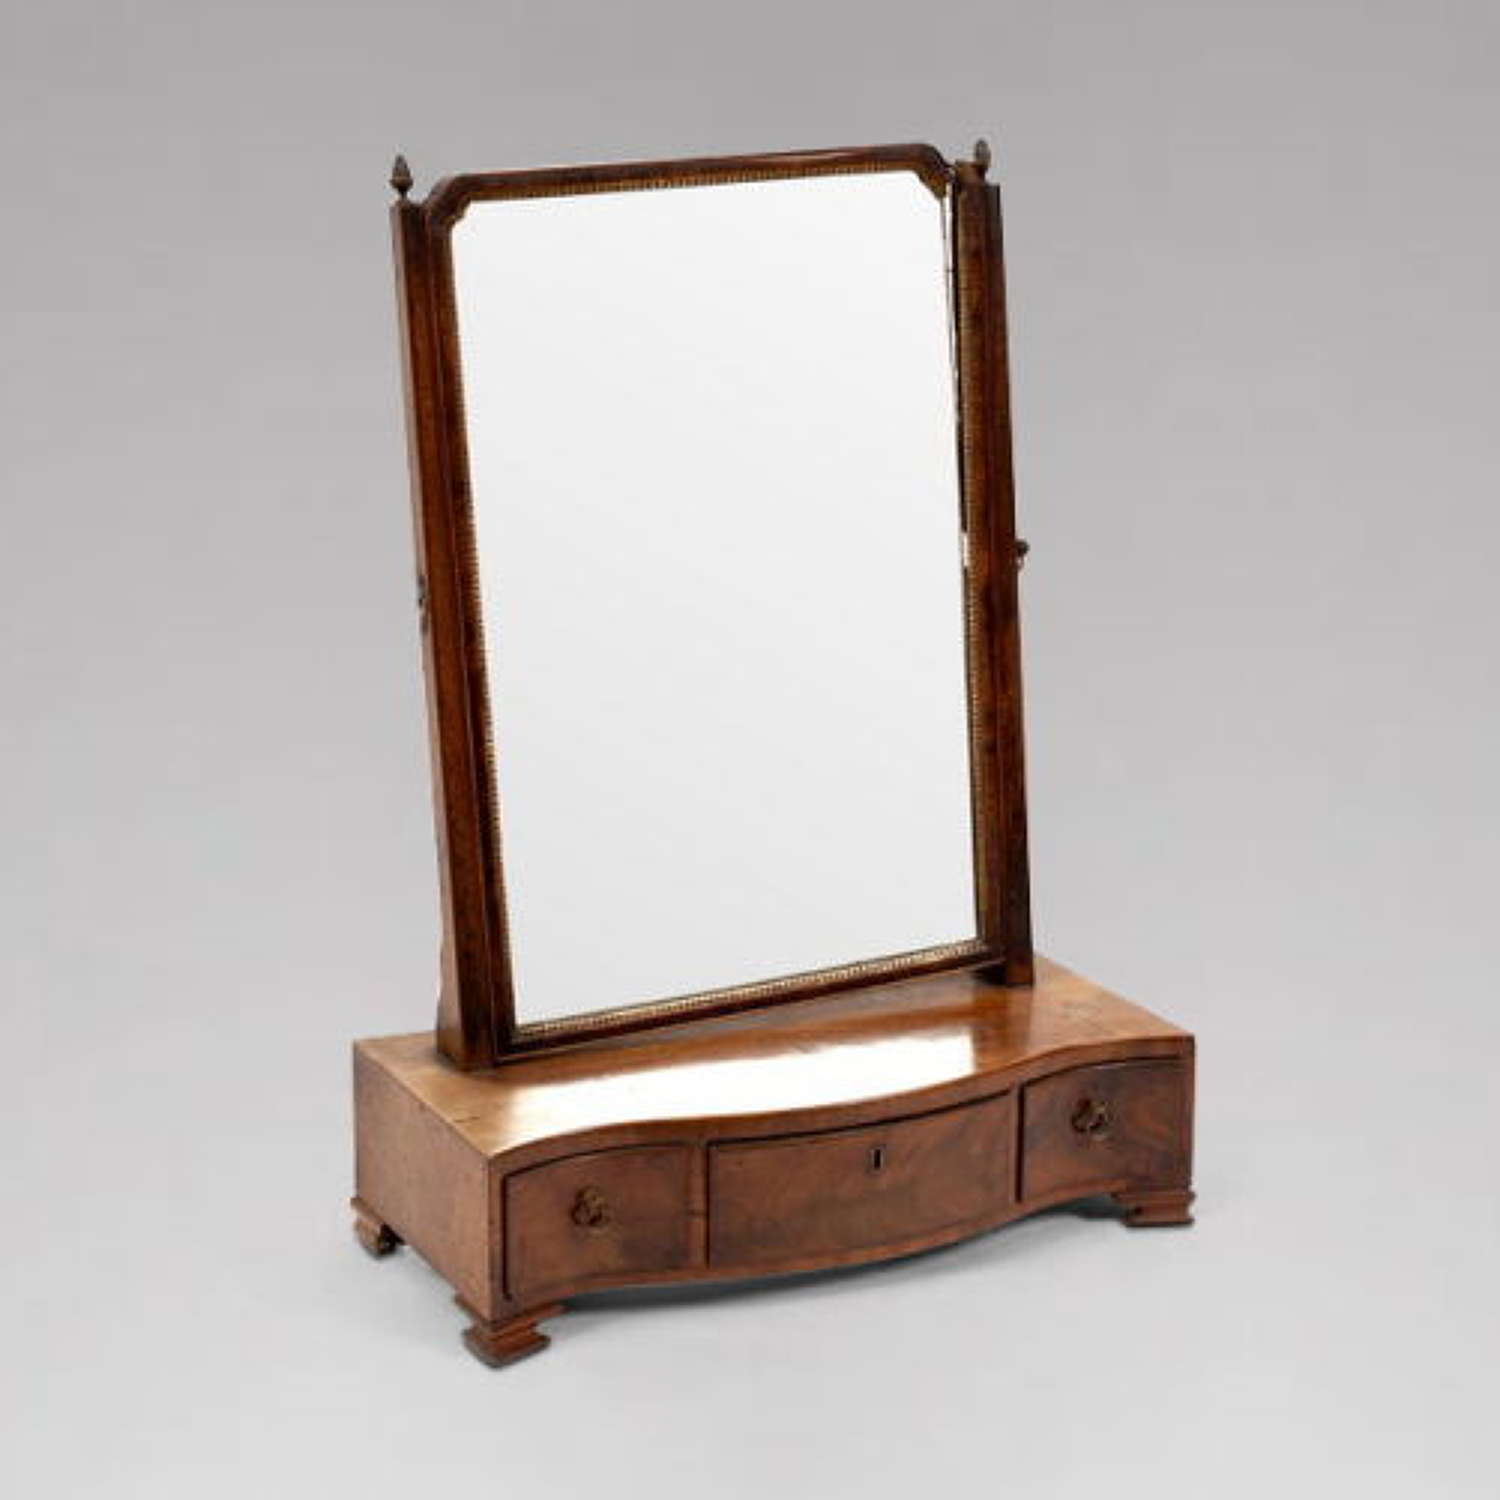 A George III Mahogany Swing Frame Toilet Mirror